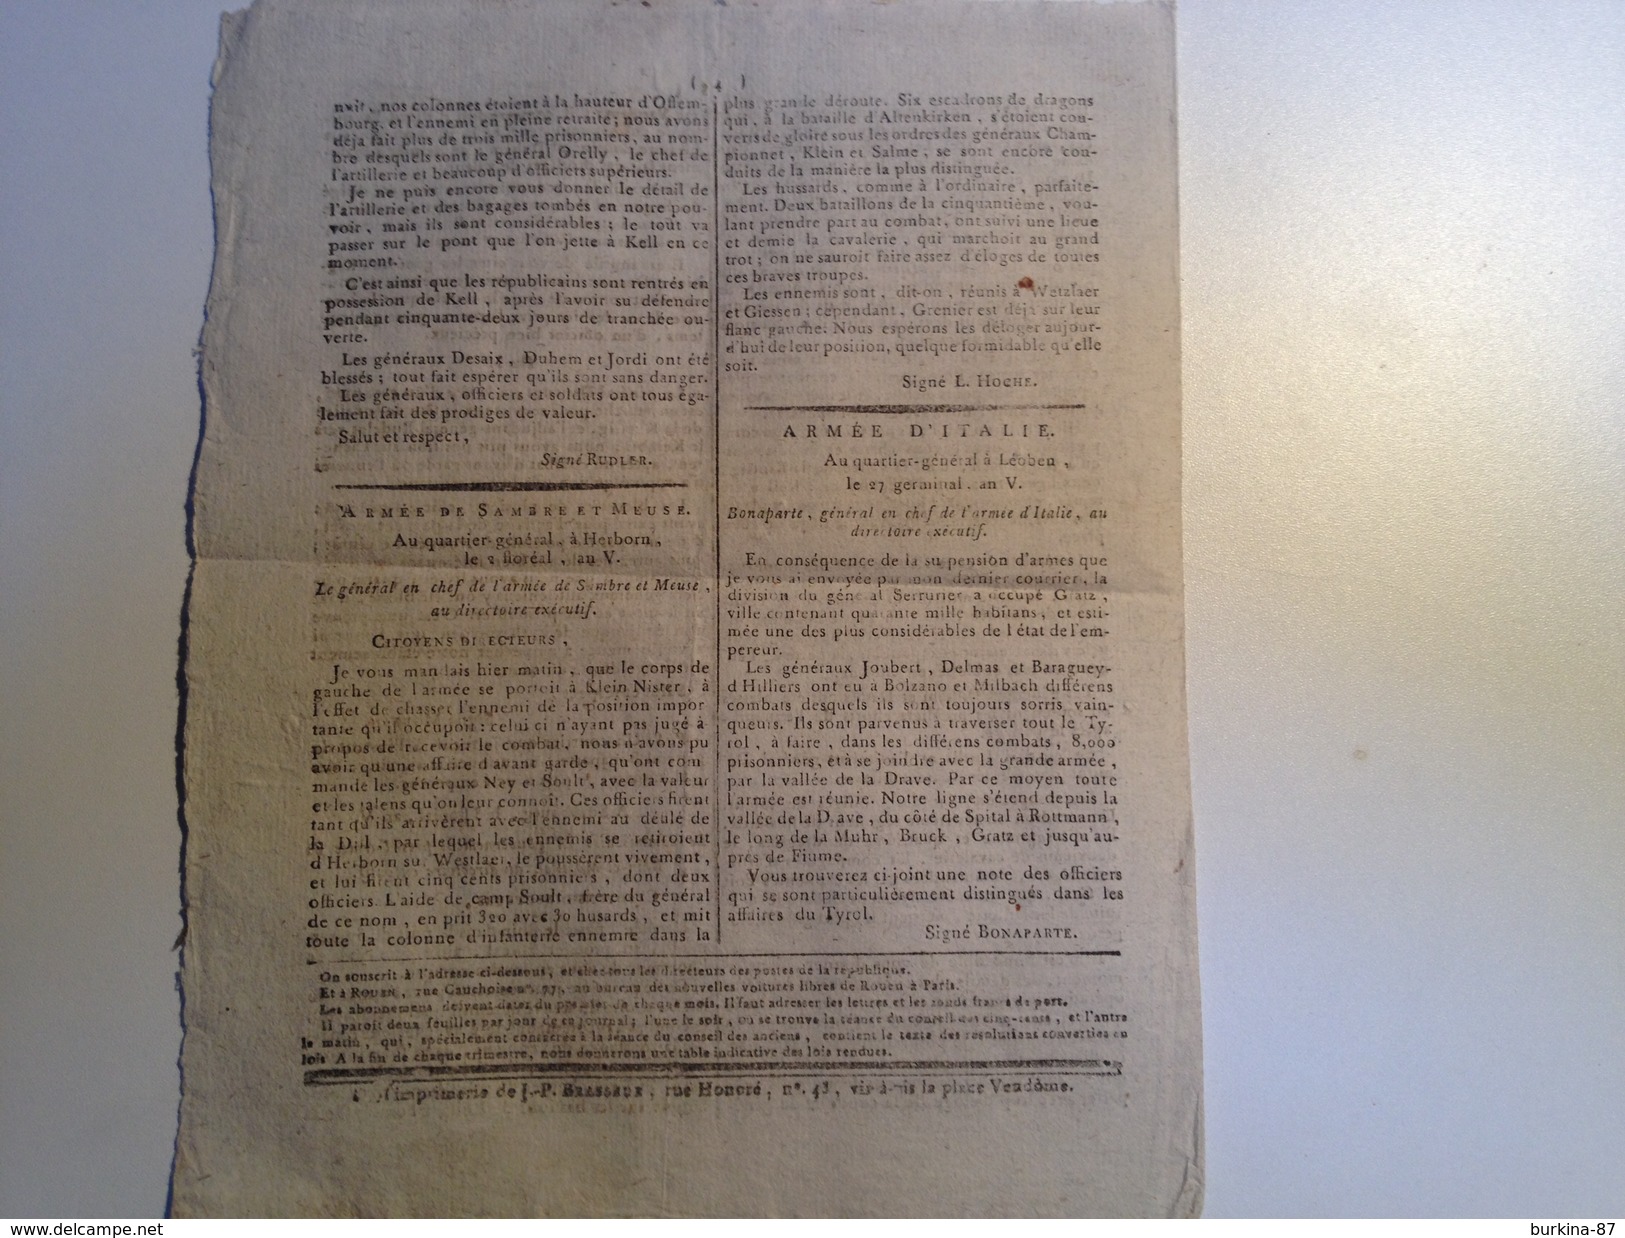 JOURNAL DU SOIR Et Recueil Complet Des Lois , 26 AVRIL 1797 - Kranten Voor 1800